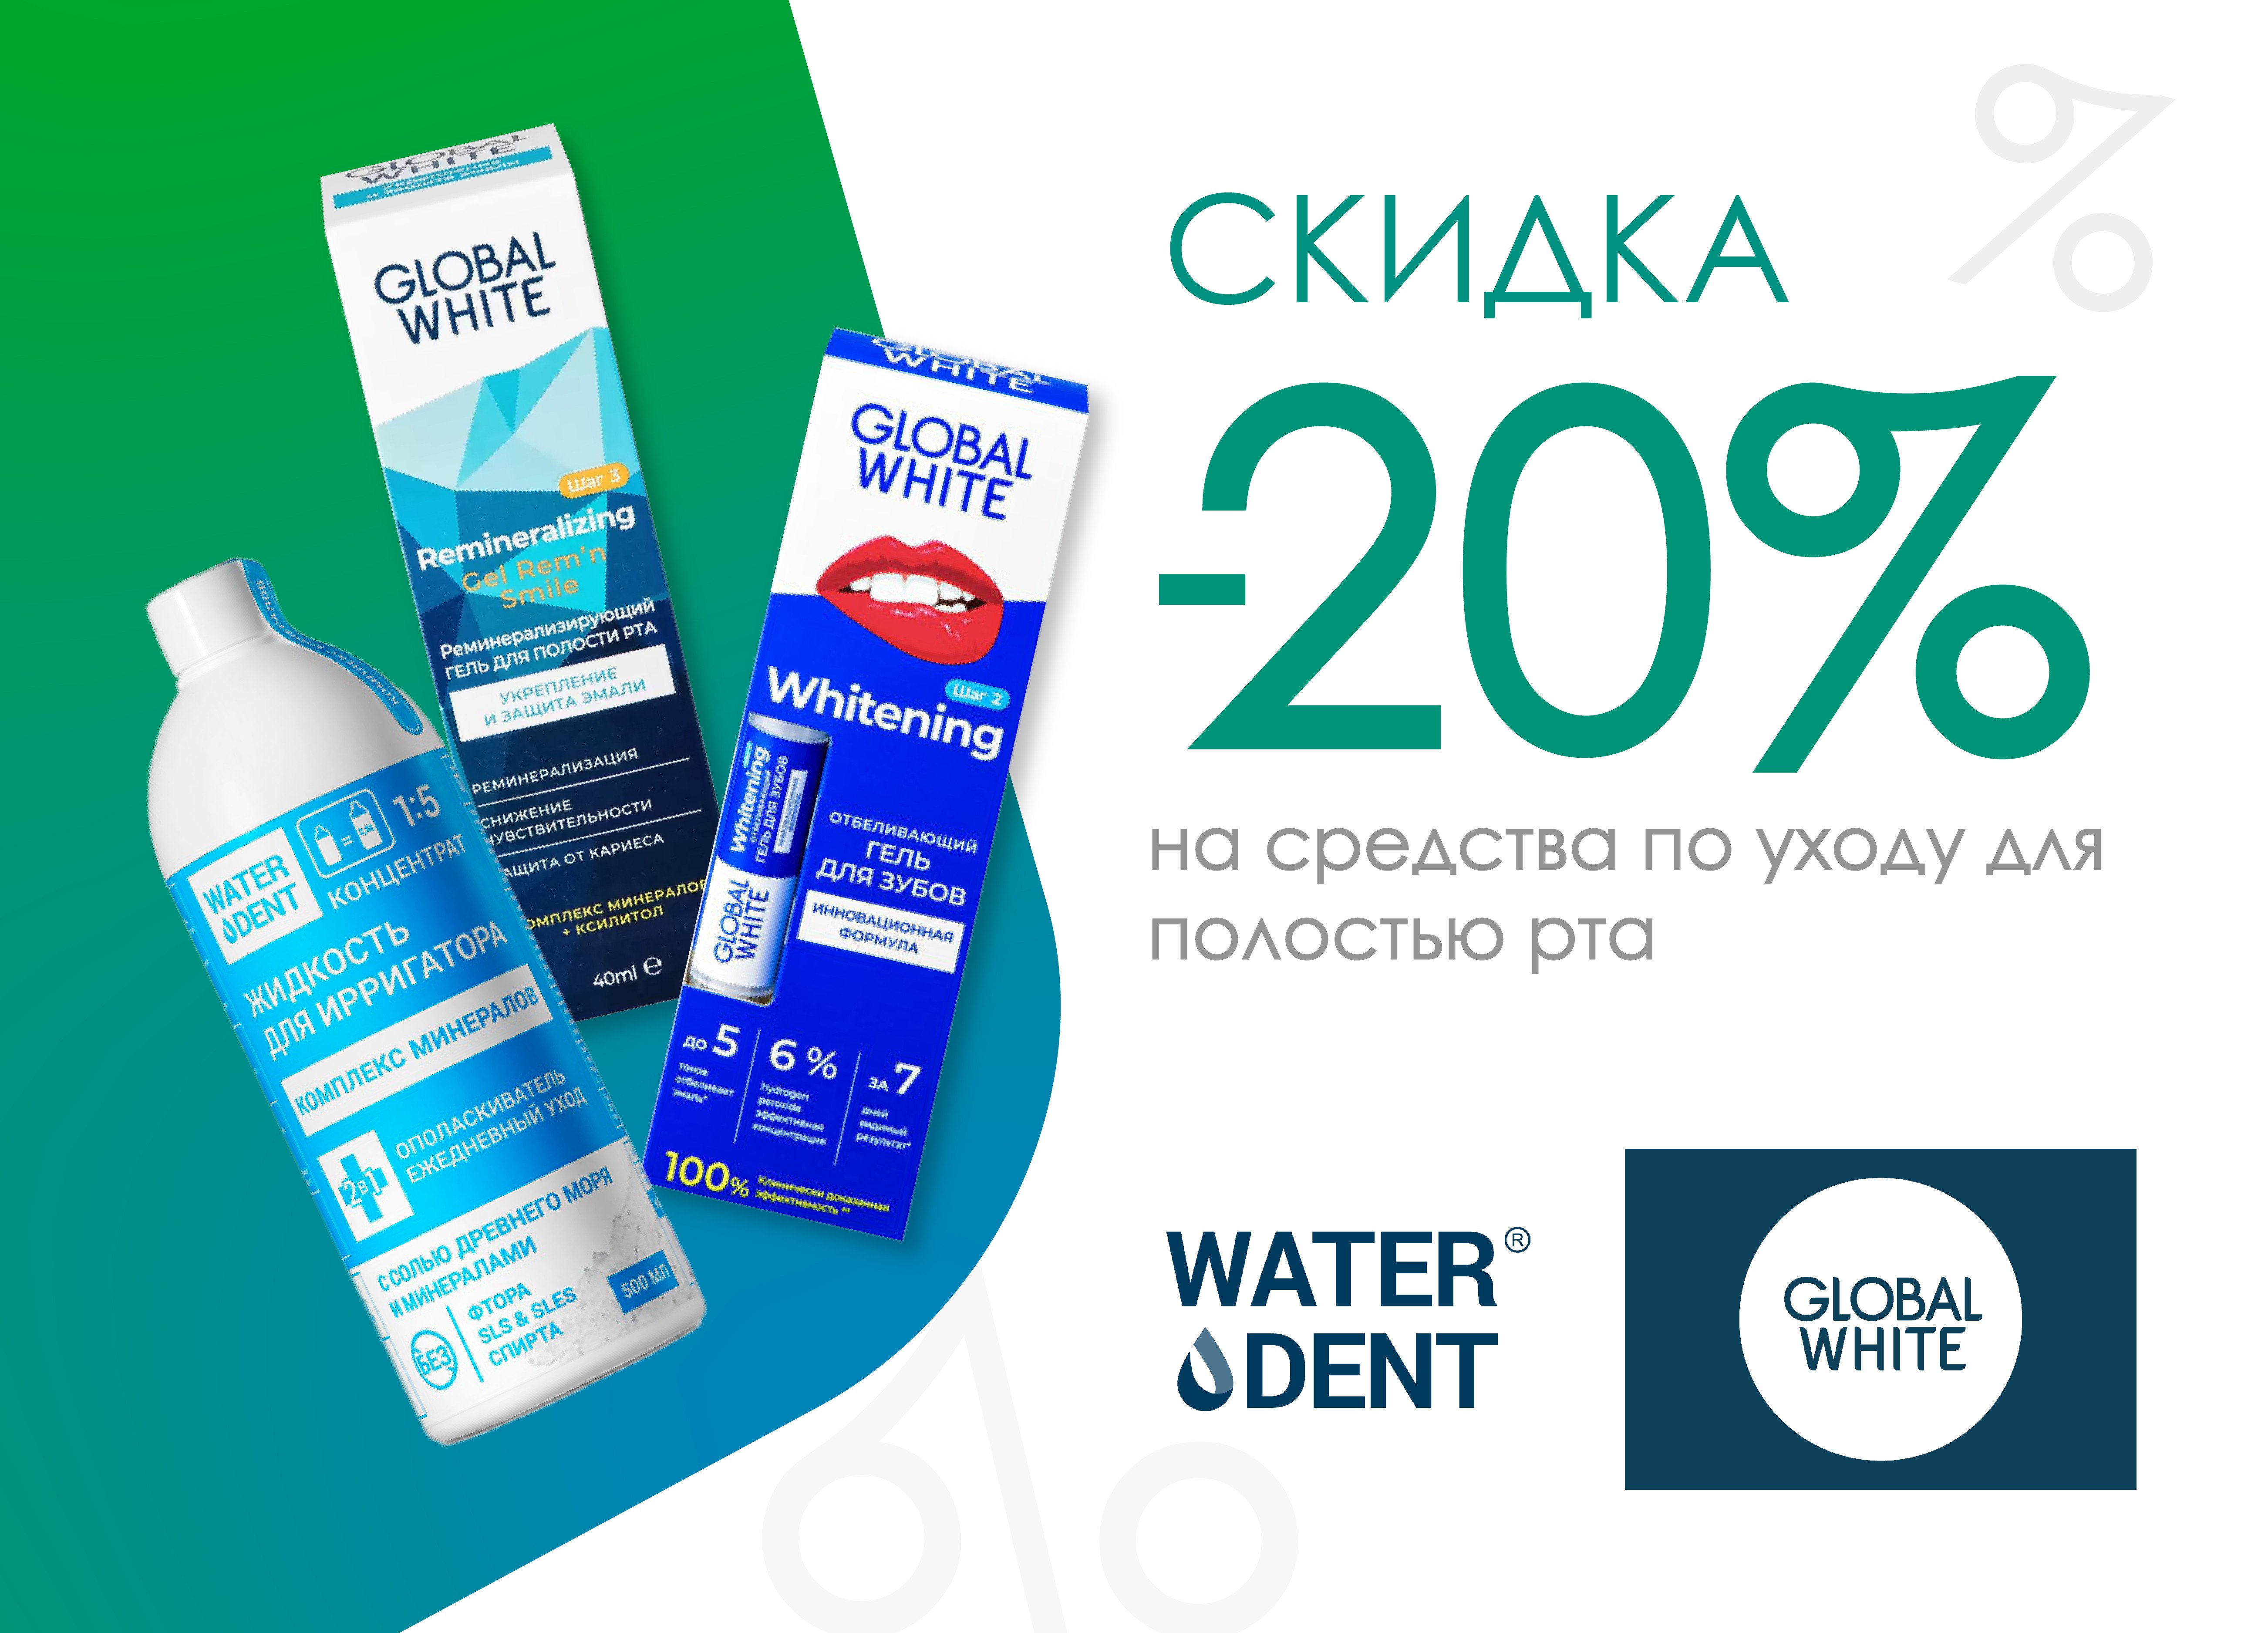 Global White & Water Dent